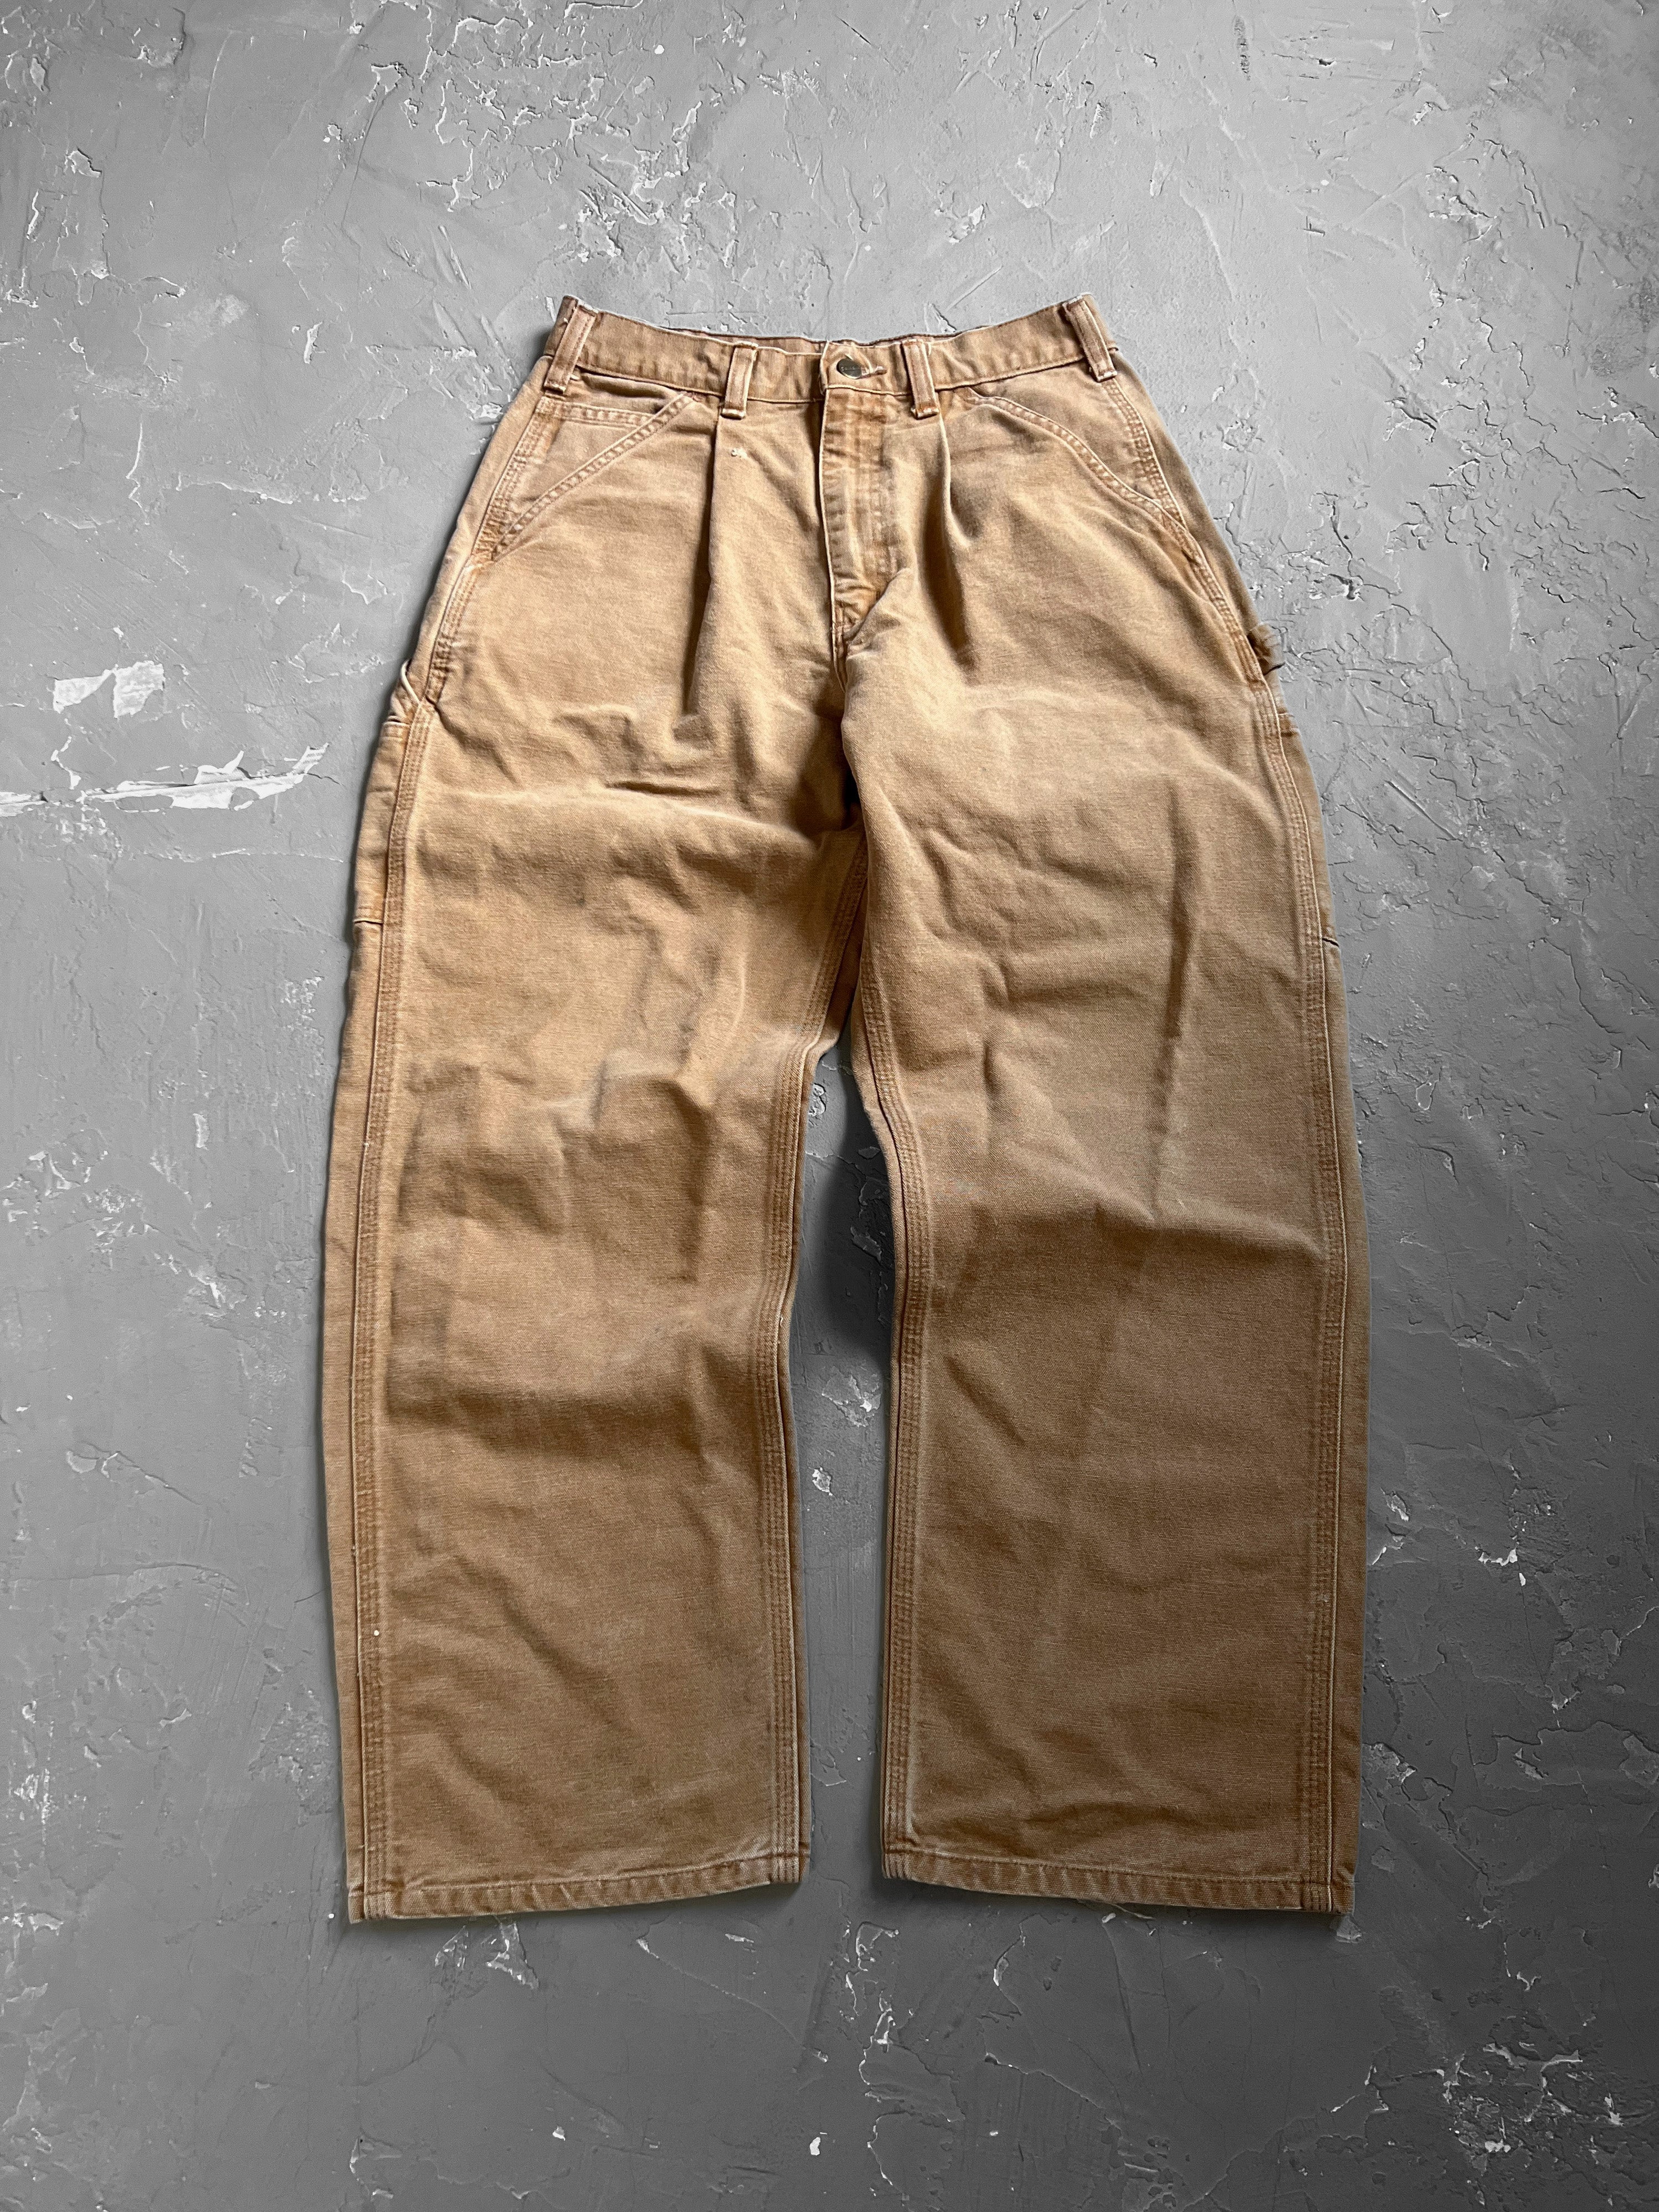 Carhartt Tan Carpenter Pants [29 x 30] – From The Past